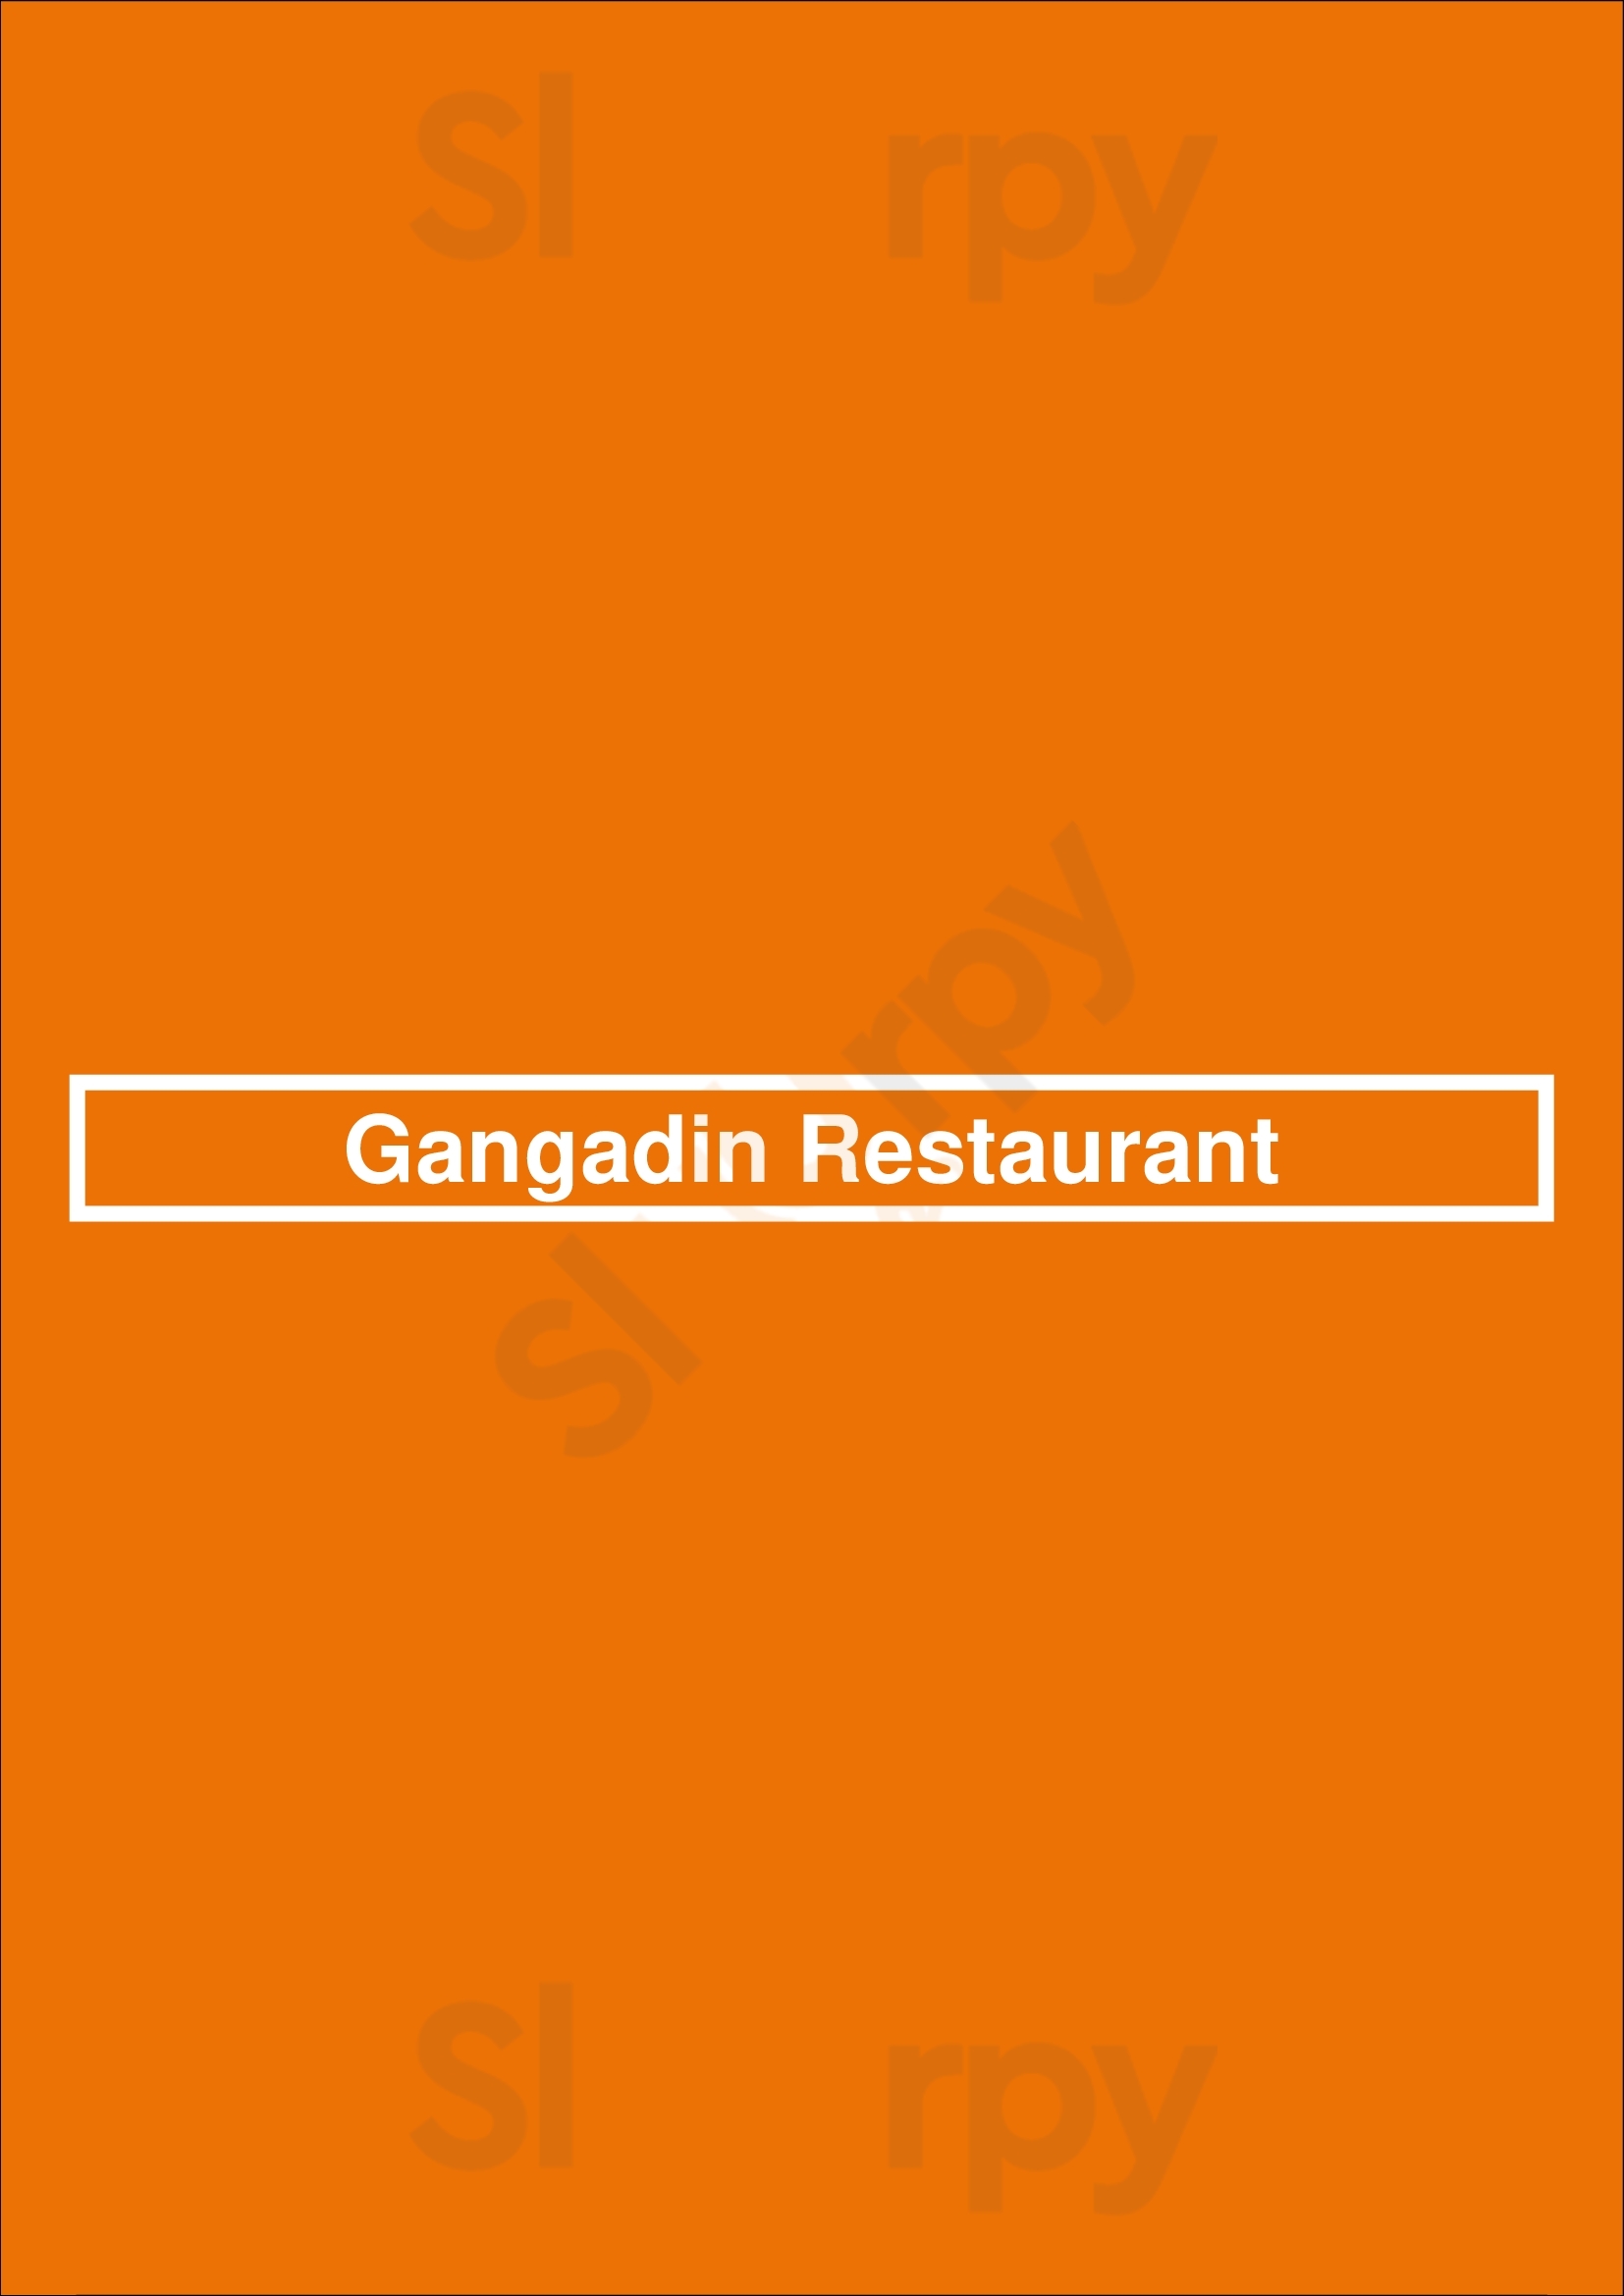 Gangadin Restaurant Los Angeles Menu - 1